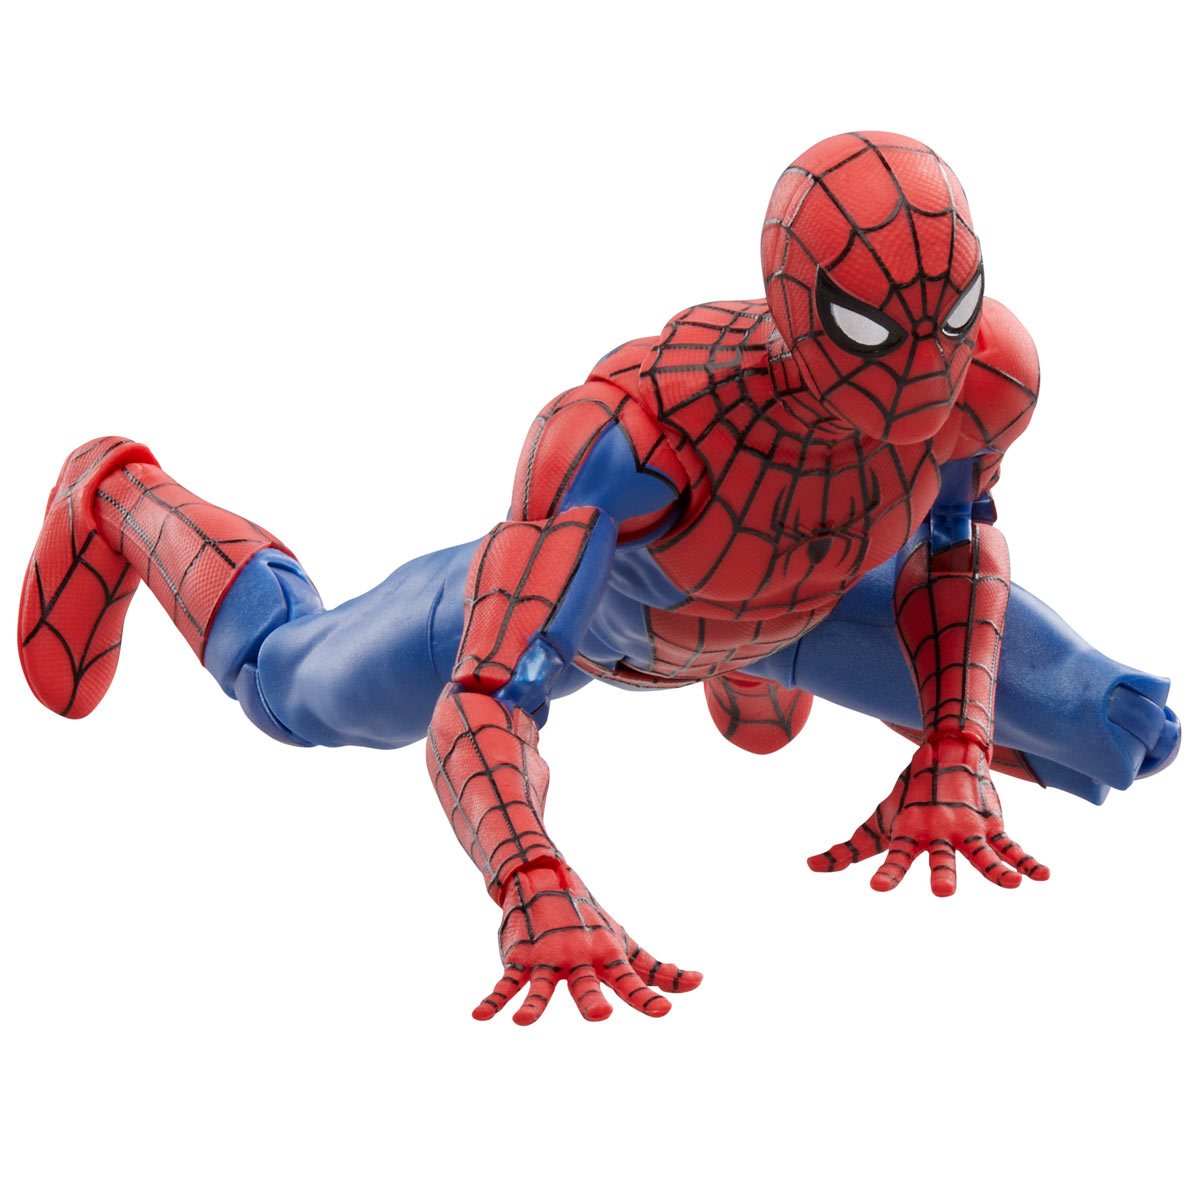 Spider-Man Marvel Legends Series Spider-Man: No Way Home Green Goblin  Deluxe 6-Inch Action Figure